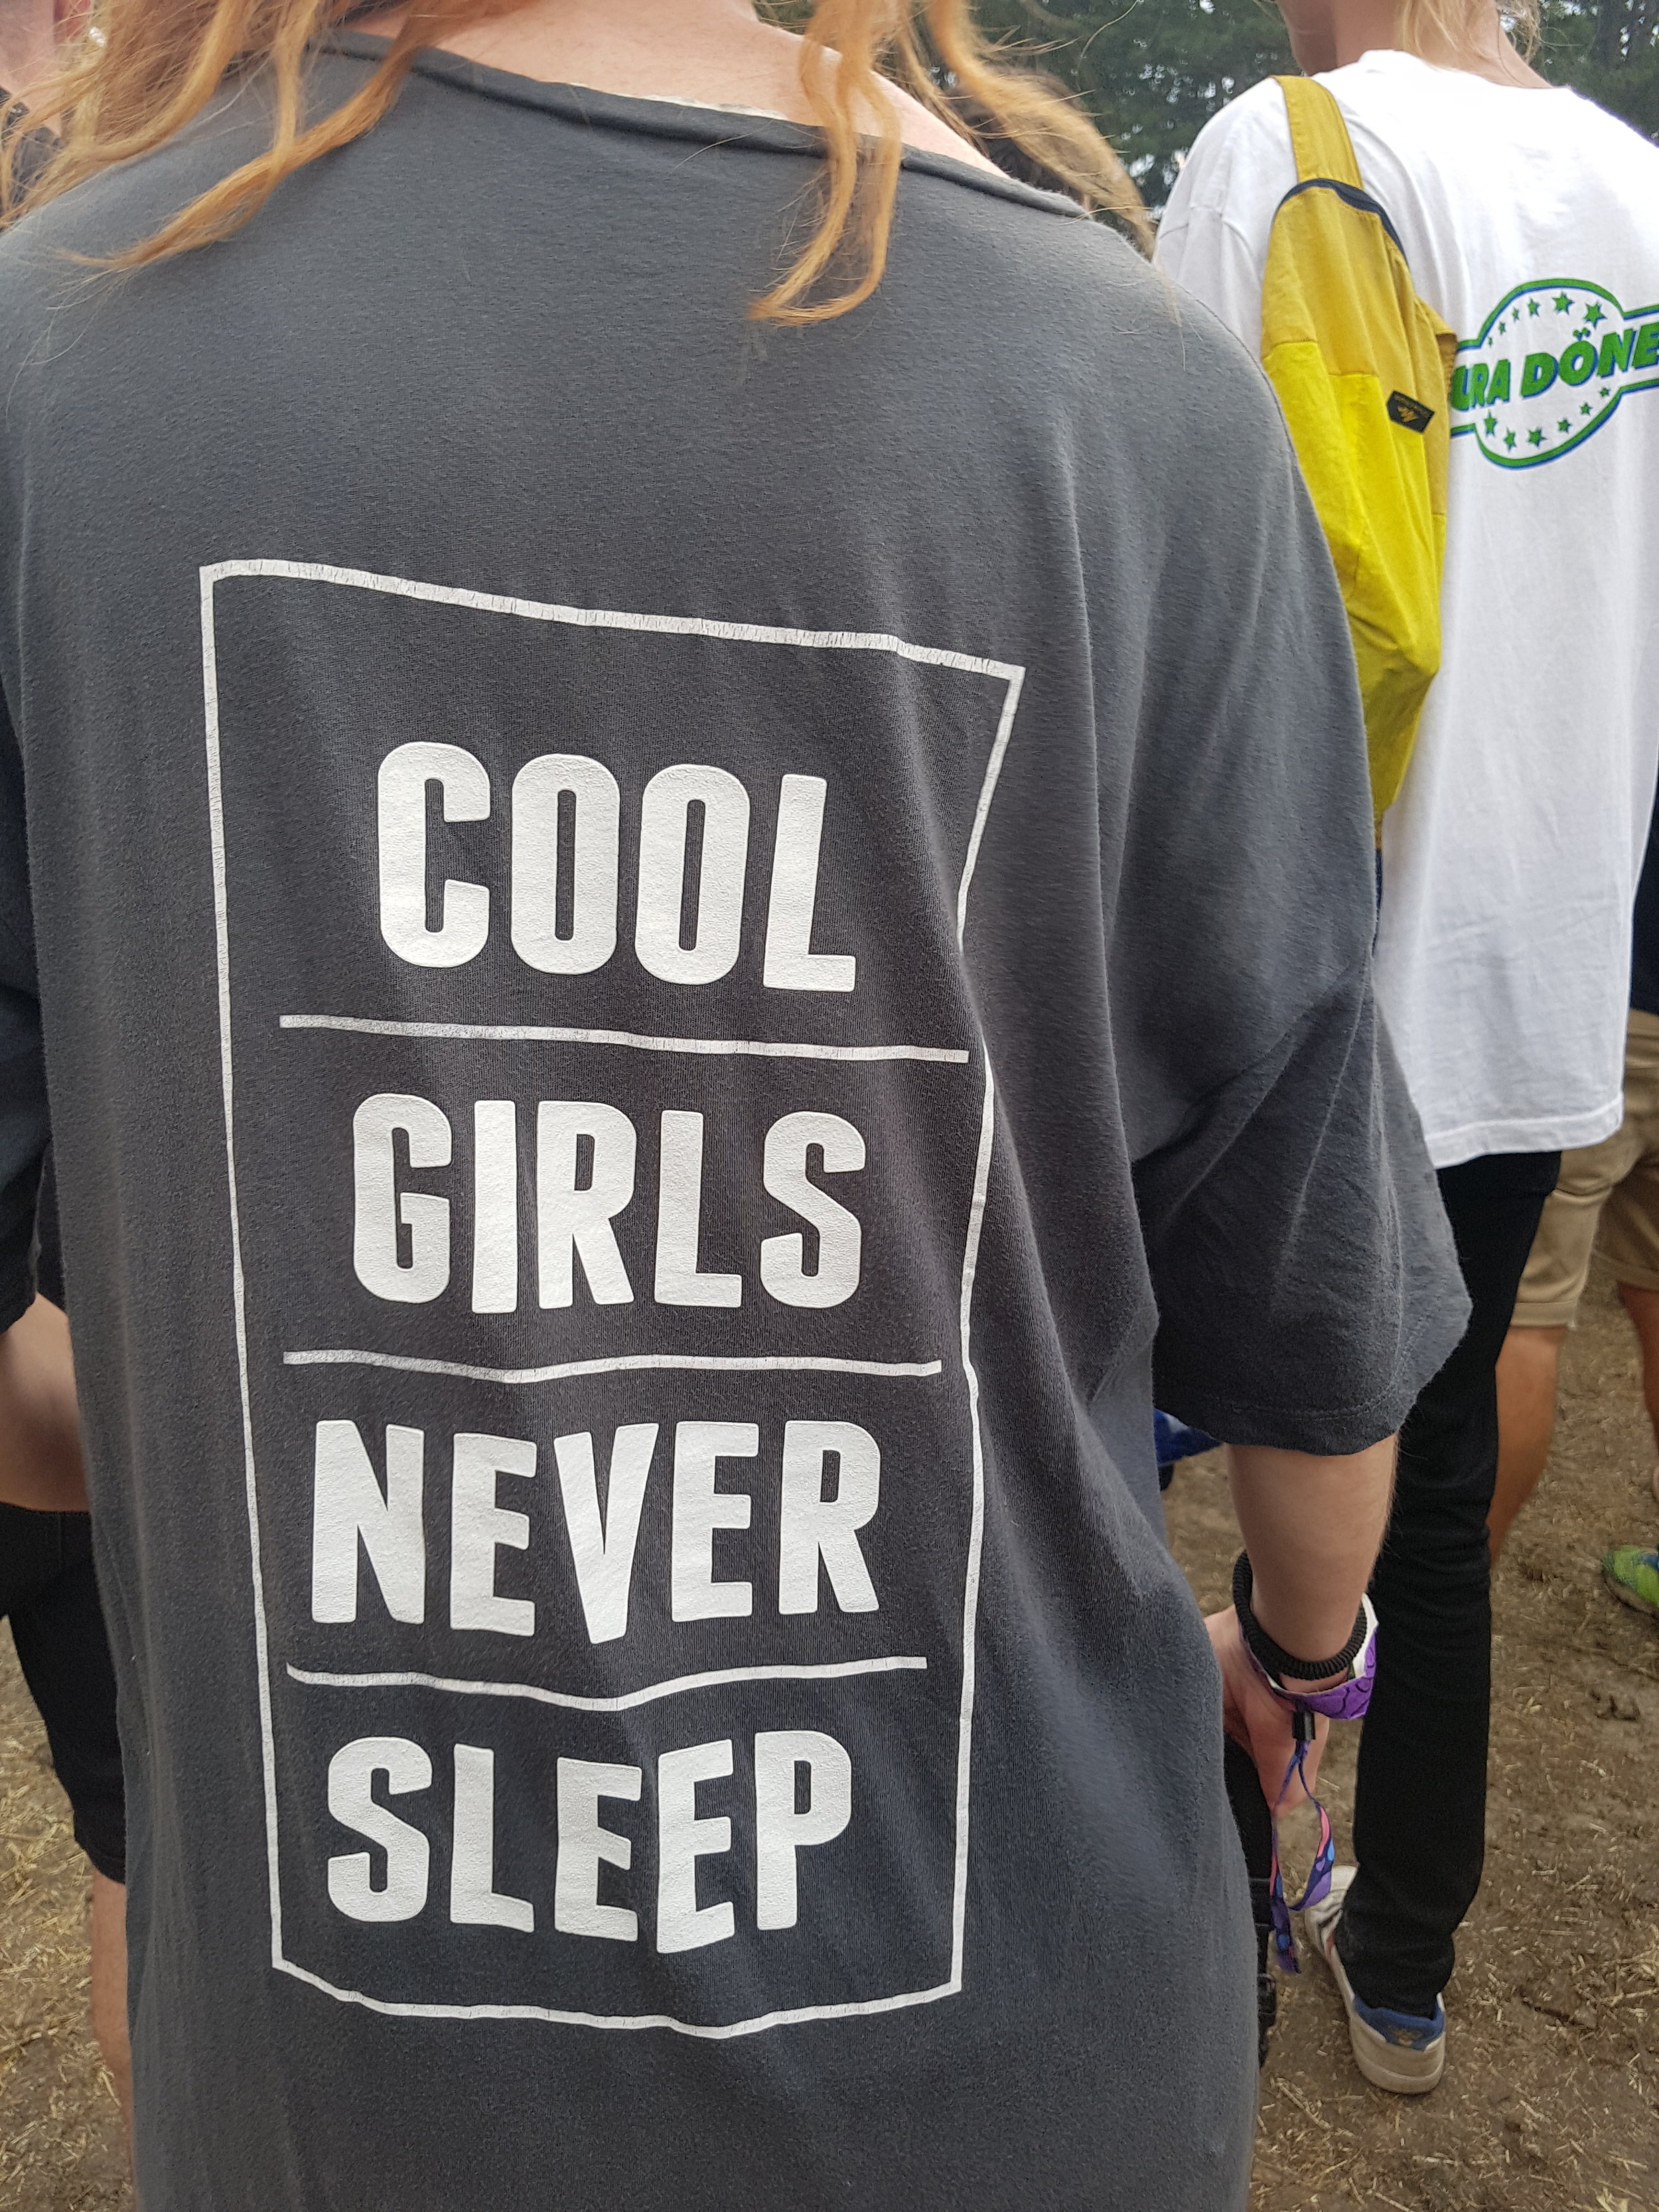 Cool Girls Never Sleep.jpg